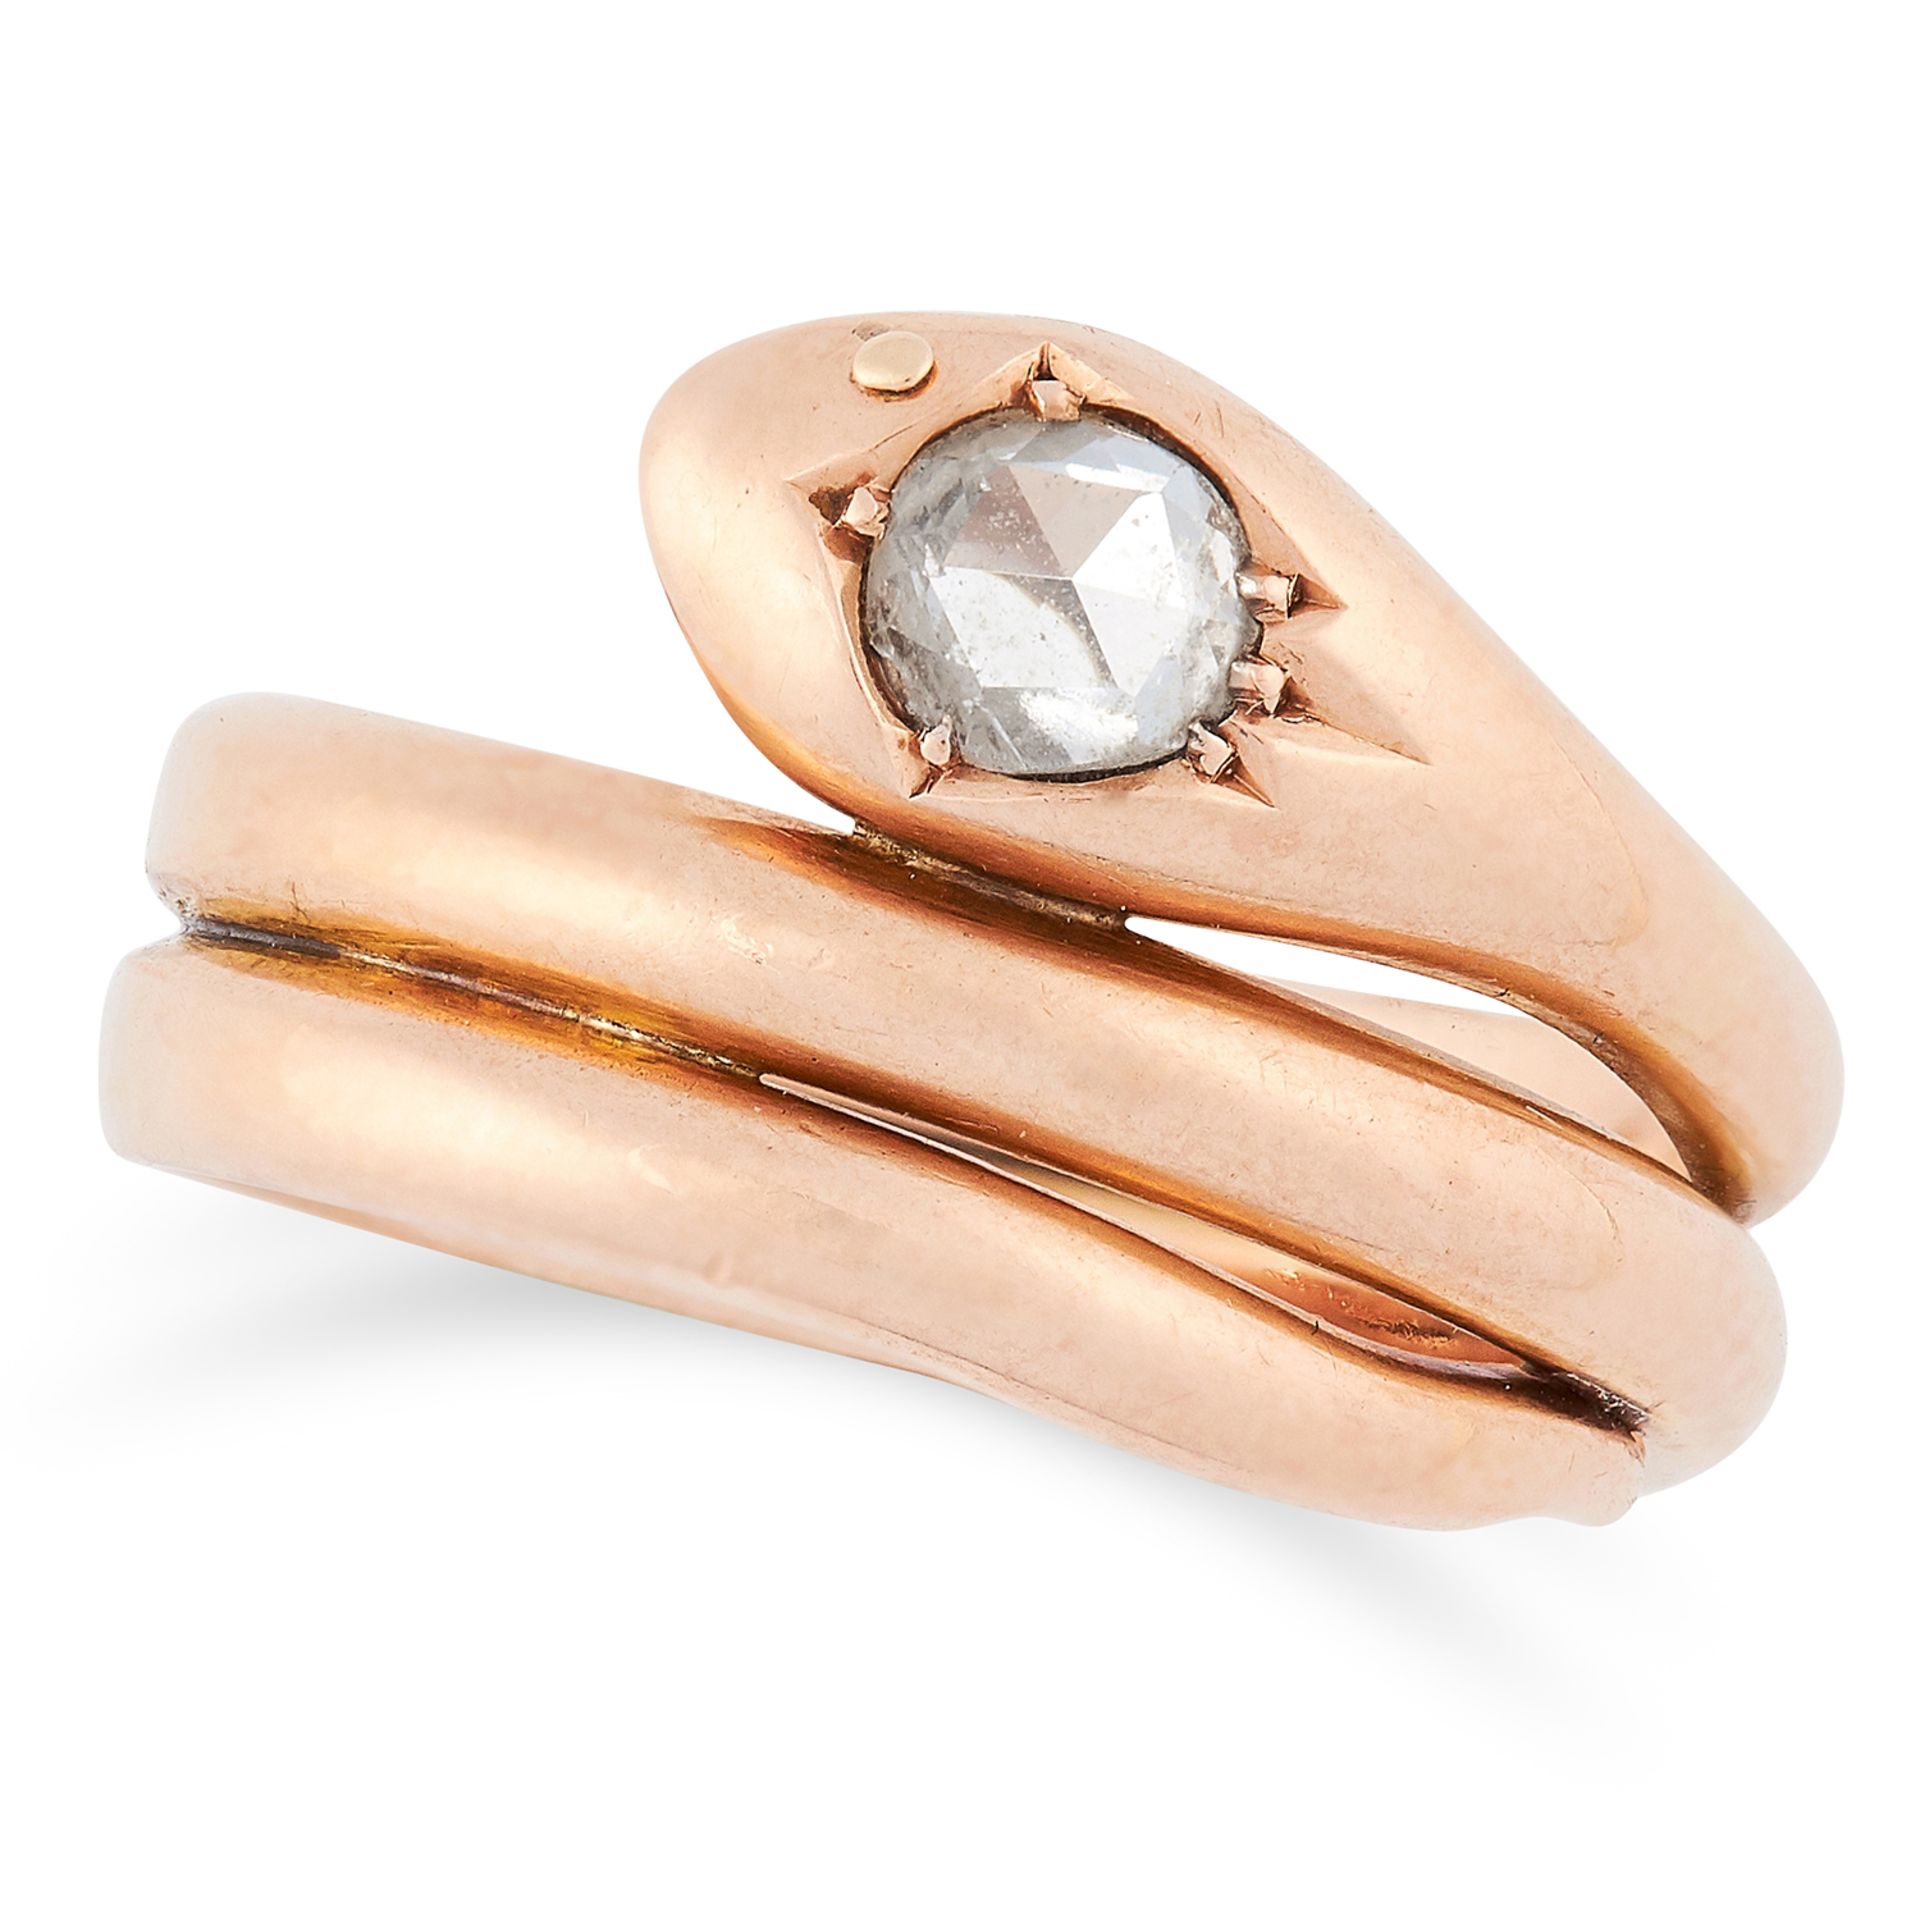 ANTIQUE DIAMOND SNAKE RING set with a rose cut diamond, size Q / 8, 8.9g.